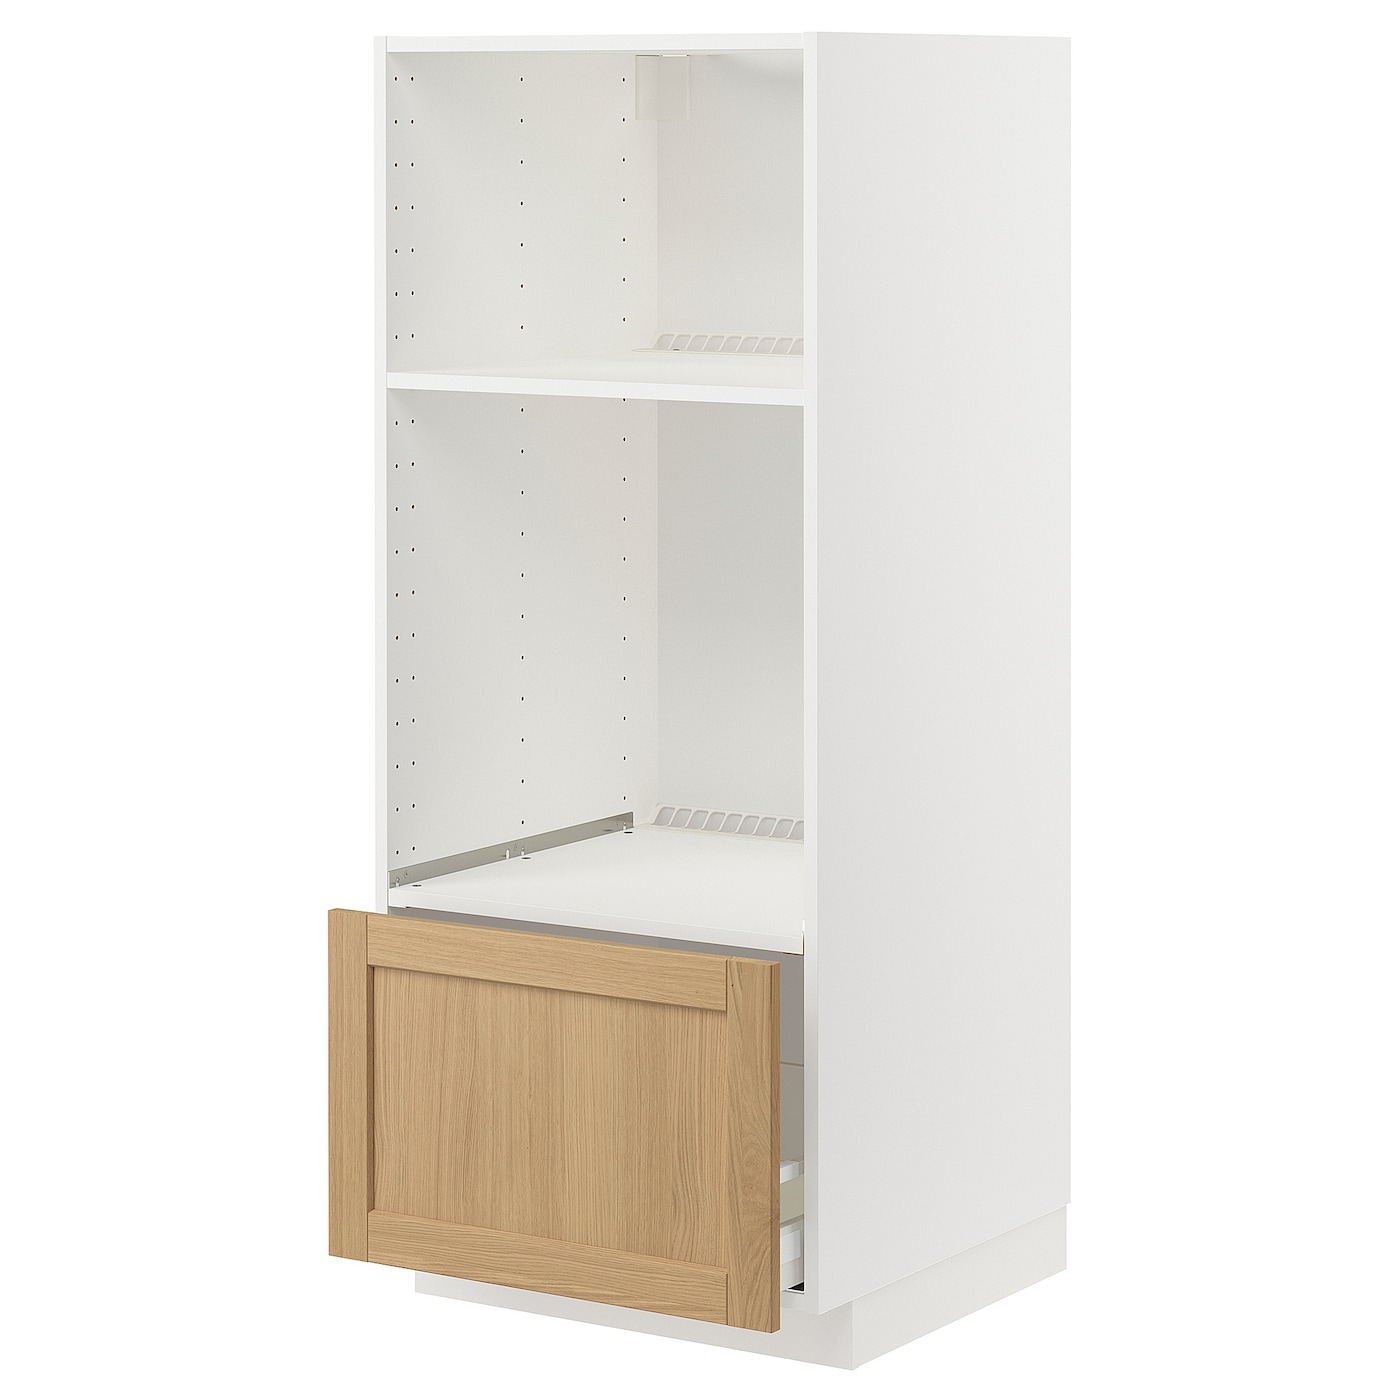 Навесной шкаф - METOD / MAXIMERA IKEA/ МЕТОД/ МАКСИМЕРА ИКЕА,  60х60х140  см, белый/ под беленый дуб